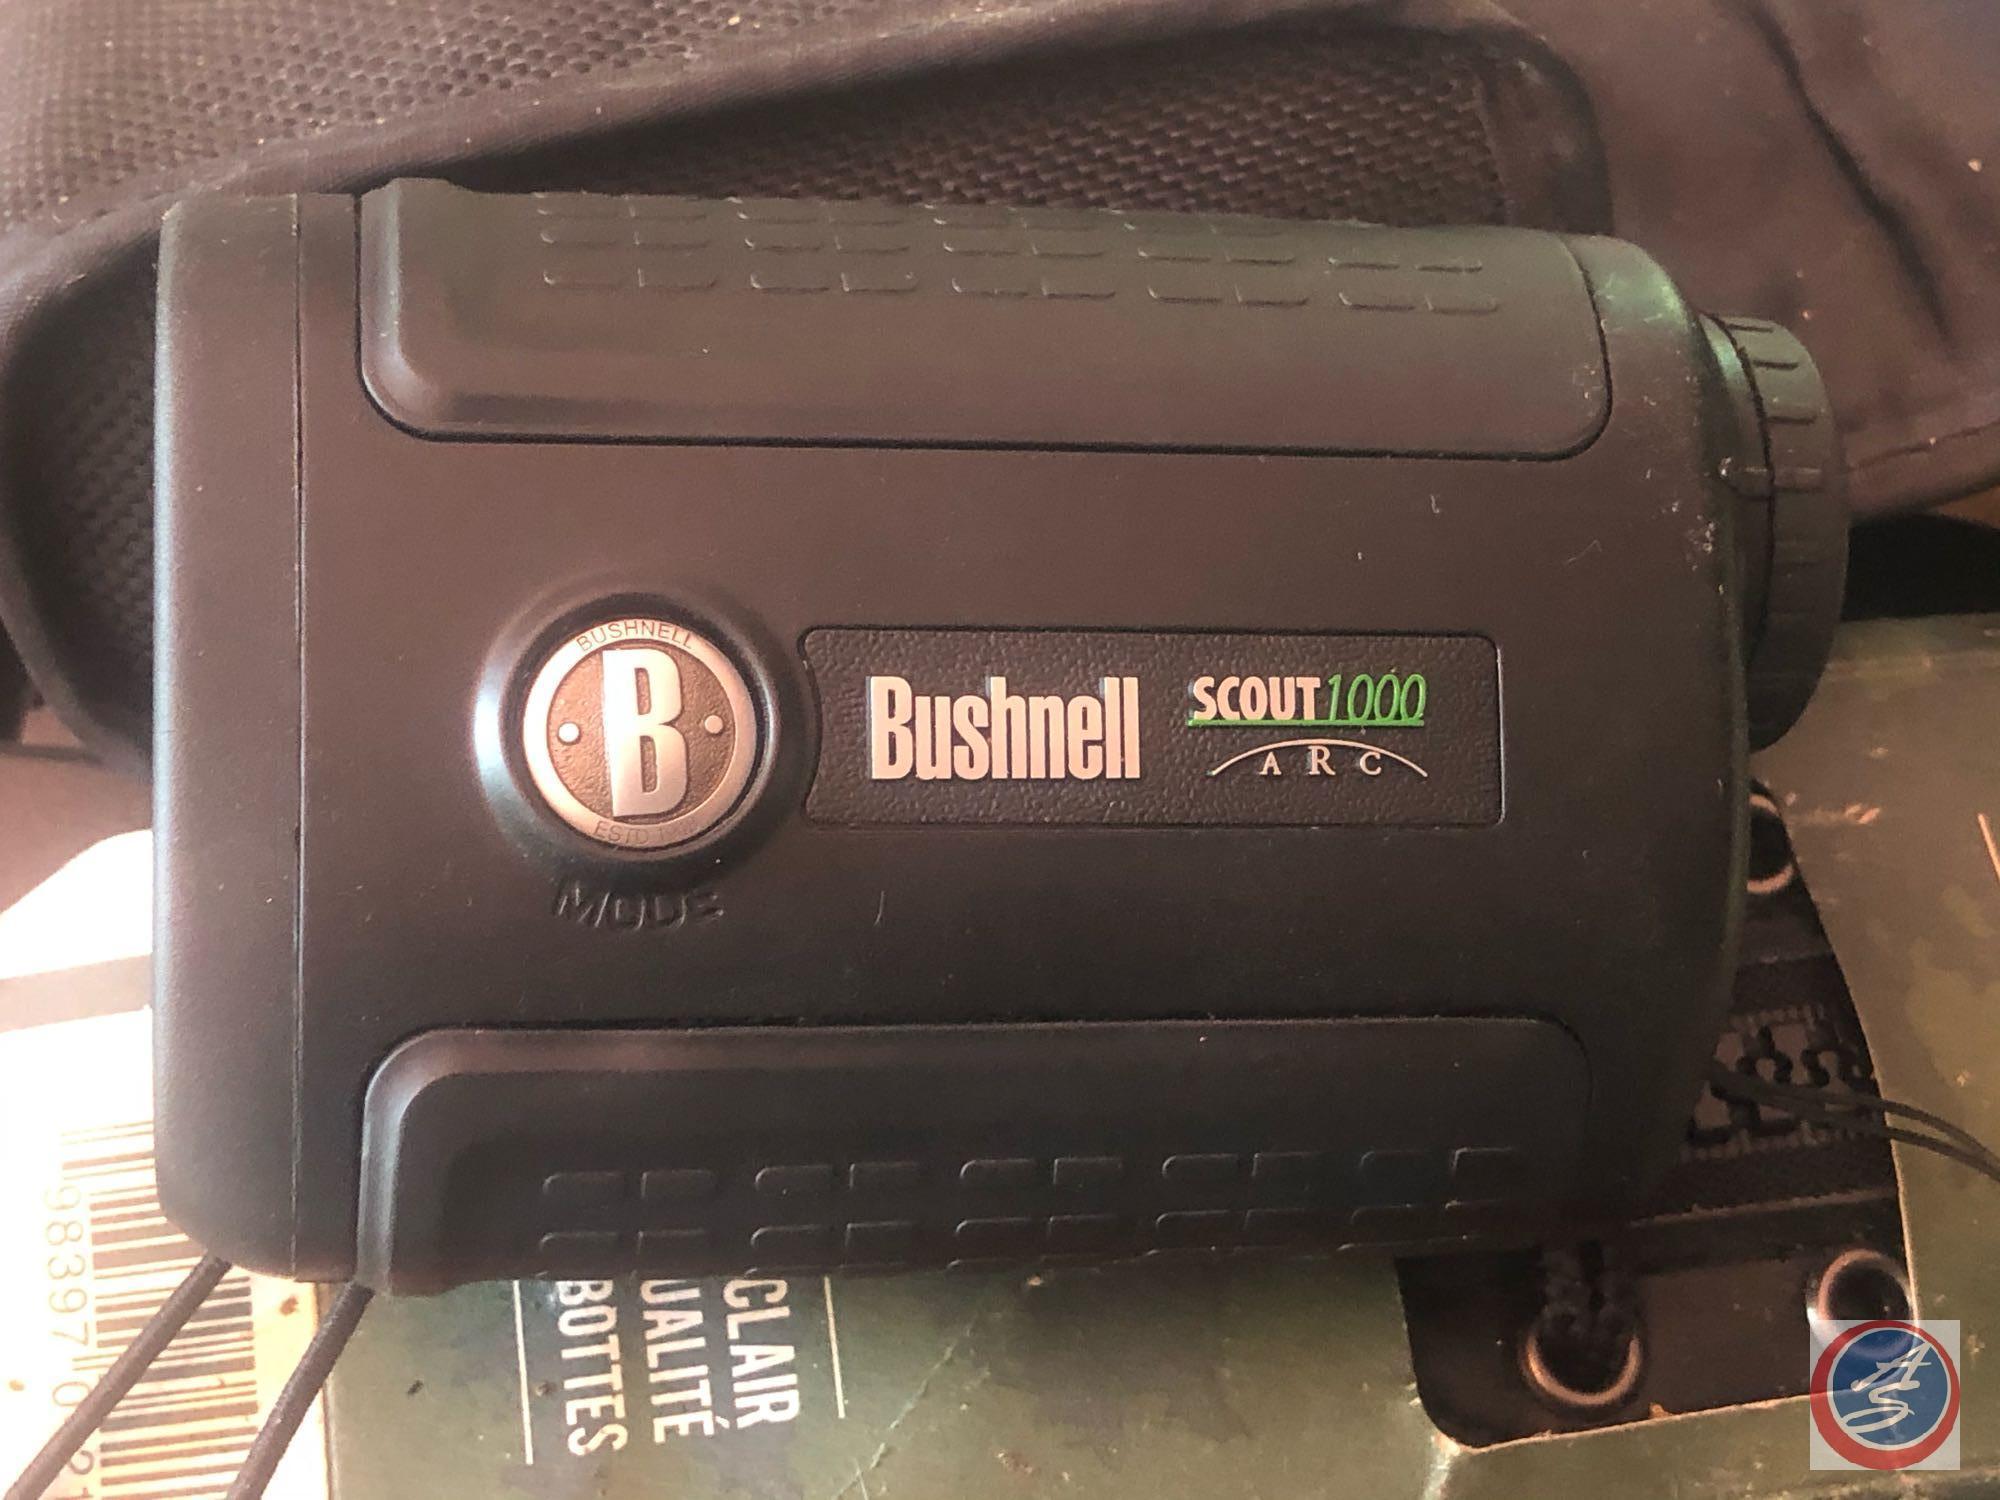 Bushnell Scout 1000 Arc Binoculars, Pioneer AVIC-S1 GPS Model No. FECZ000553UC, Loofa Cloth (2),